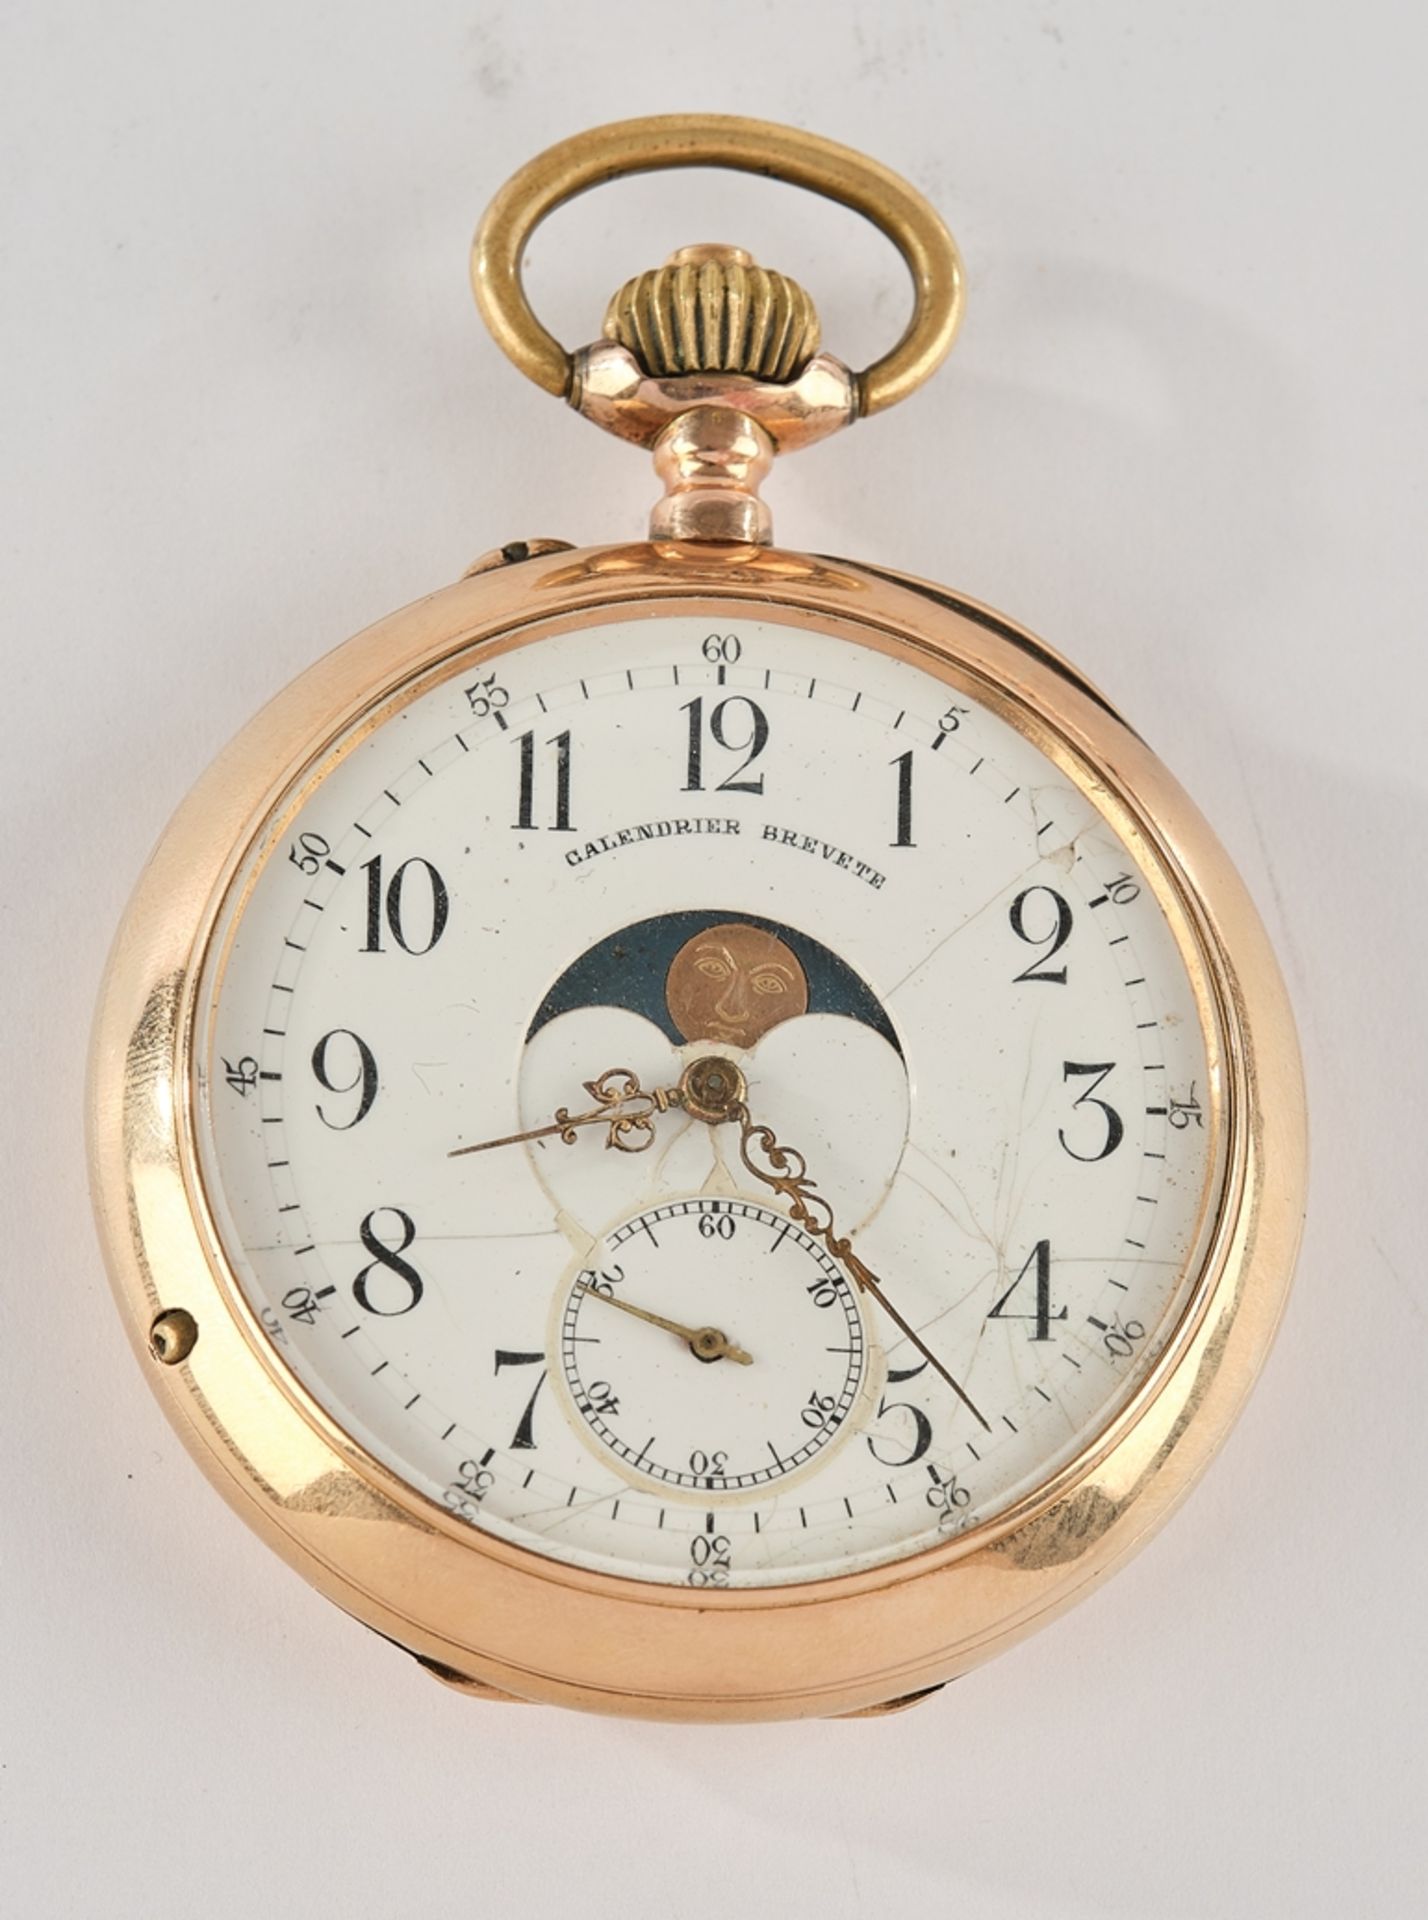 Calendar pocket watch, Switzerland, circa 1905, marked "Calendrier Brevete", rose gold 585 case, wh